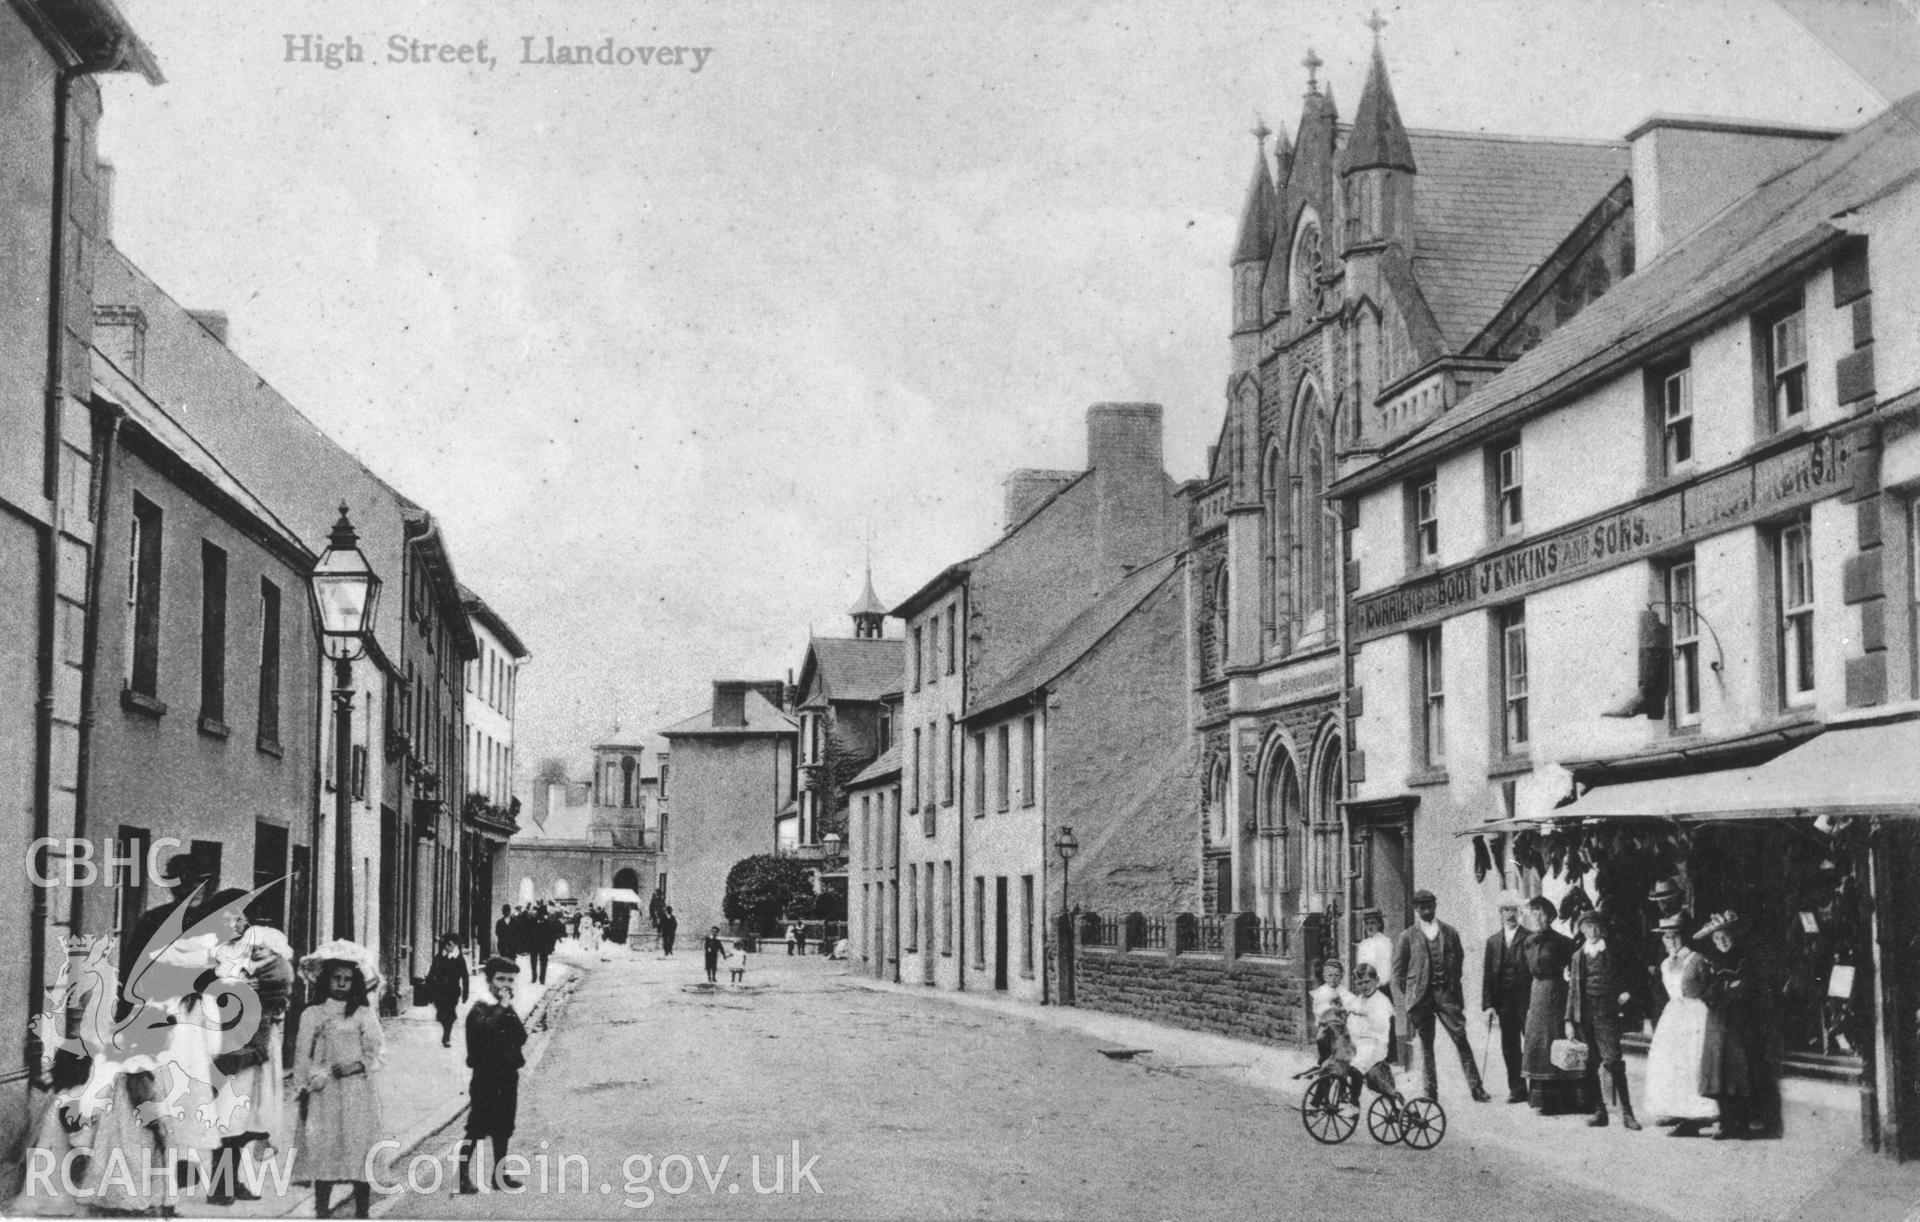 Copy of b/w postcard of High Street, Llandovery, copied from original loaned by Thomas Lloyd.  Copy negative held.